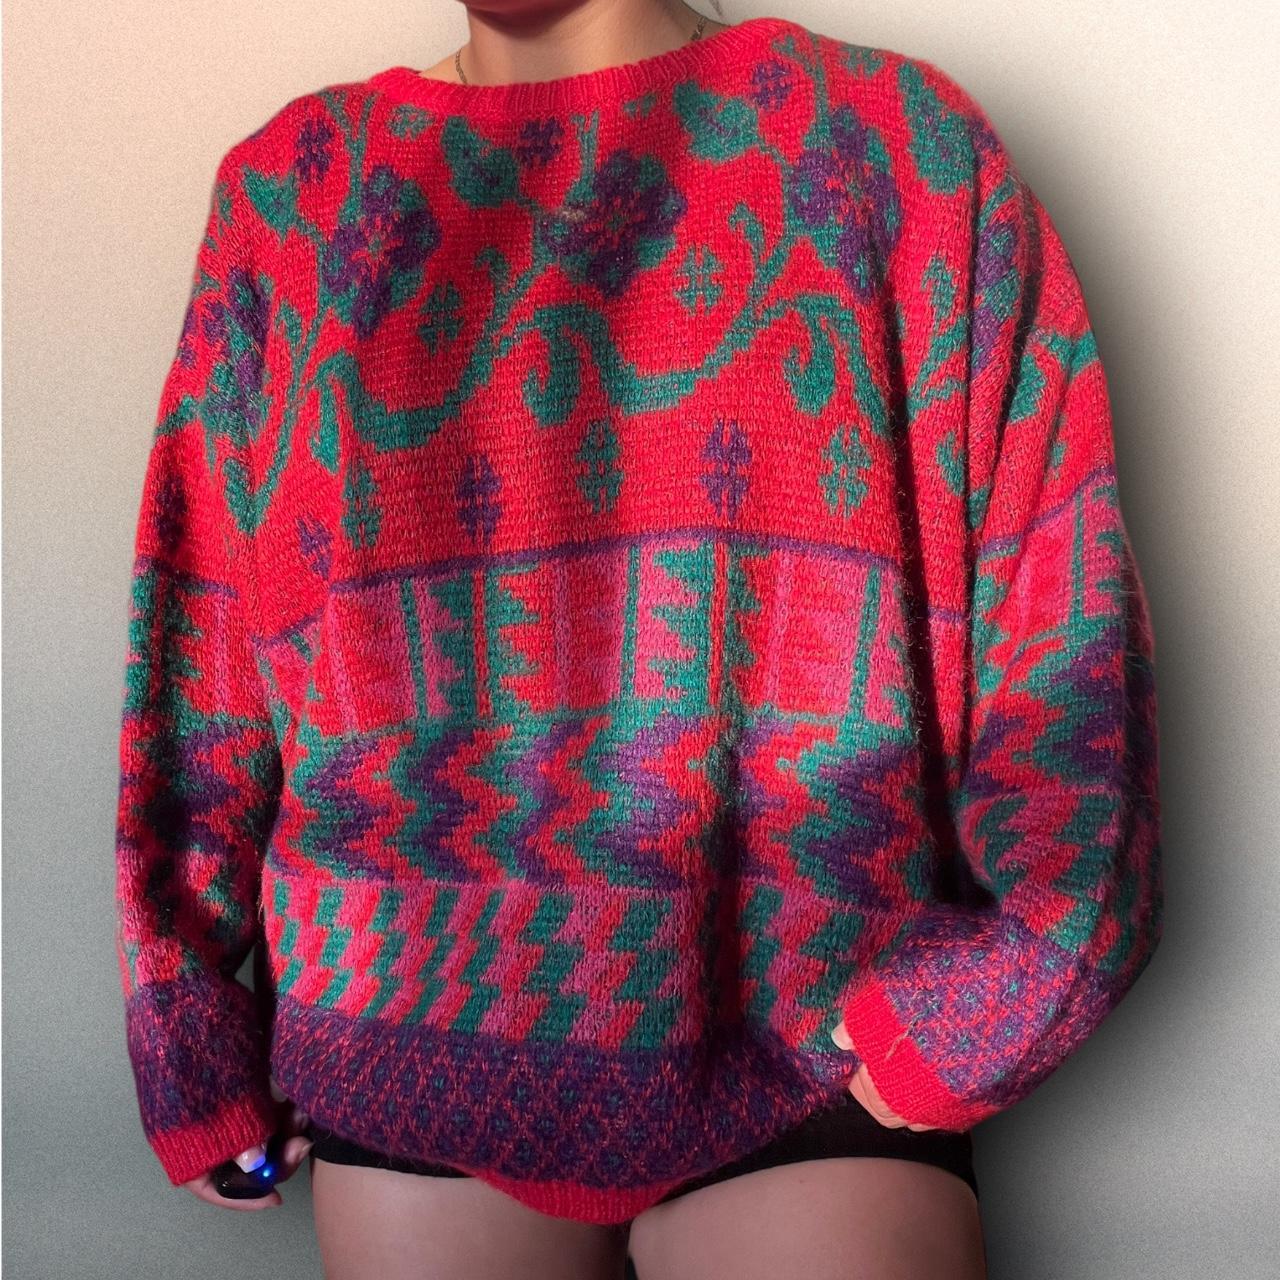 Vintage 80s Benetton knit sweater😍 ❄️ acrylic/mohair...